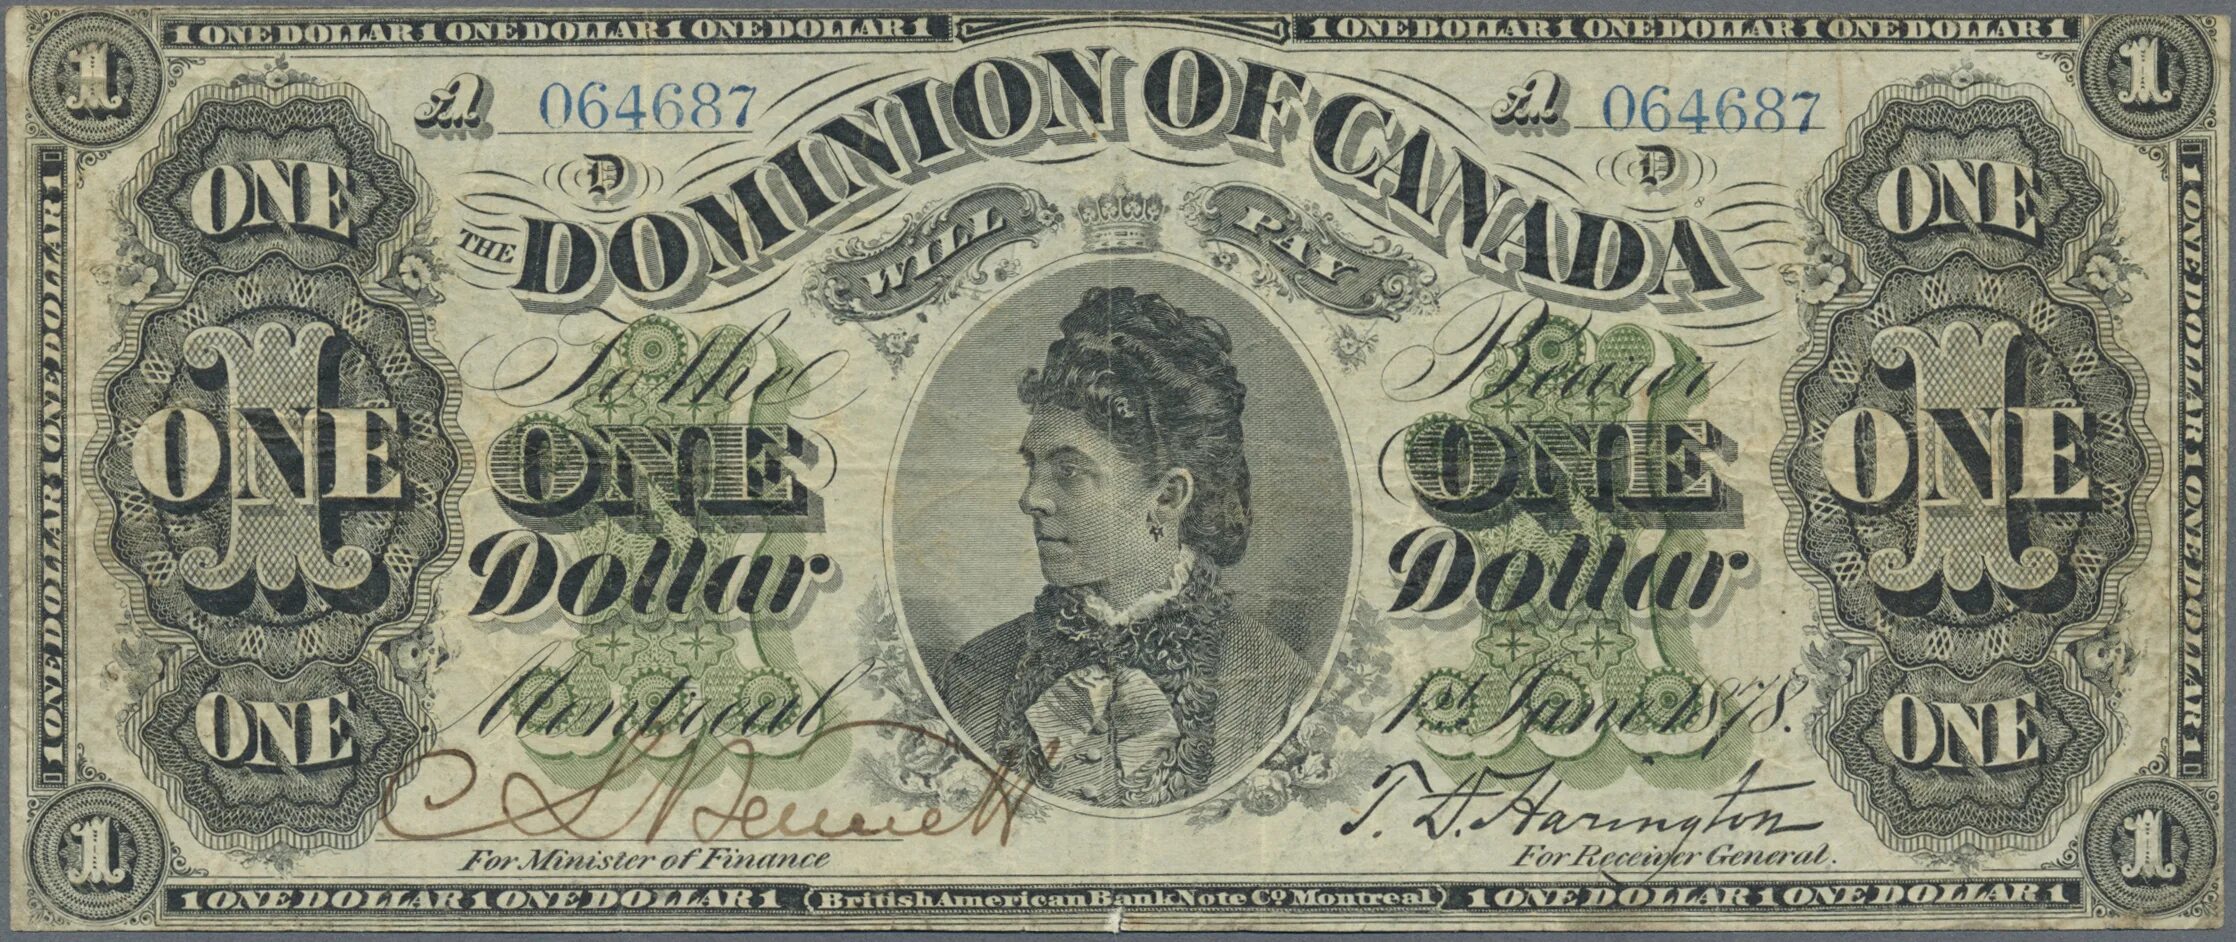 Доллар 1 октября. 1 Канадский доллар купюра. Банкнота канадский доллар 1. 1 Доллар Канады купюра. Канадские доллары старые.